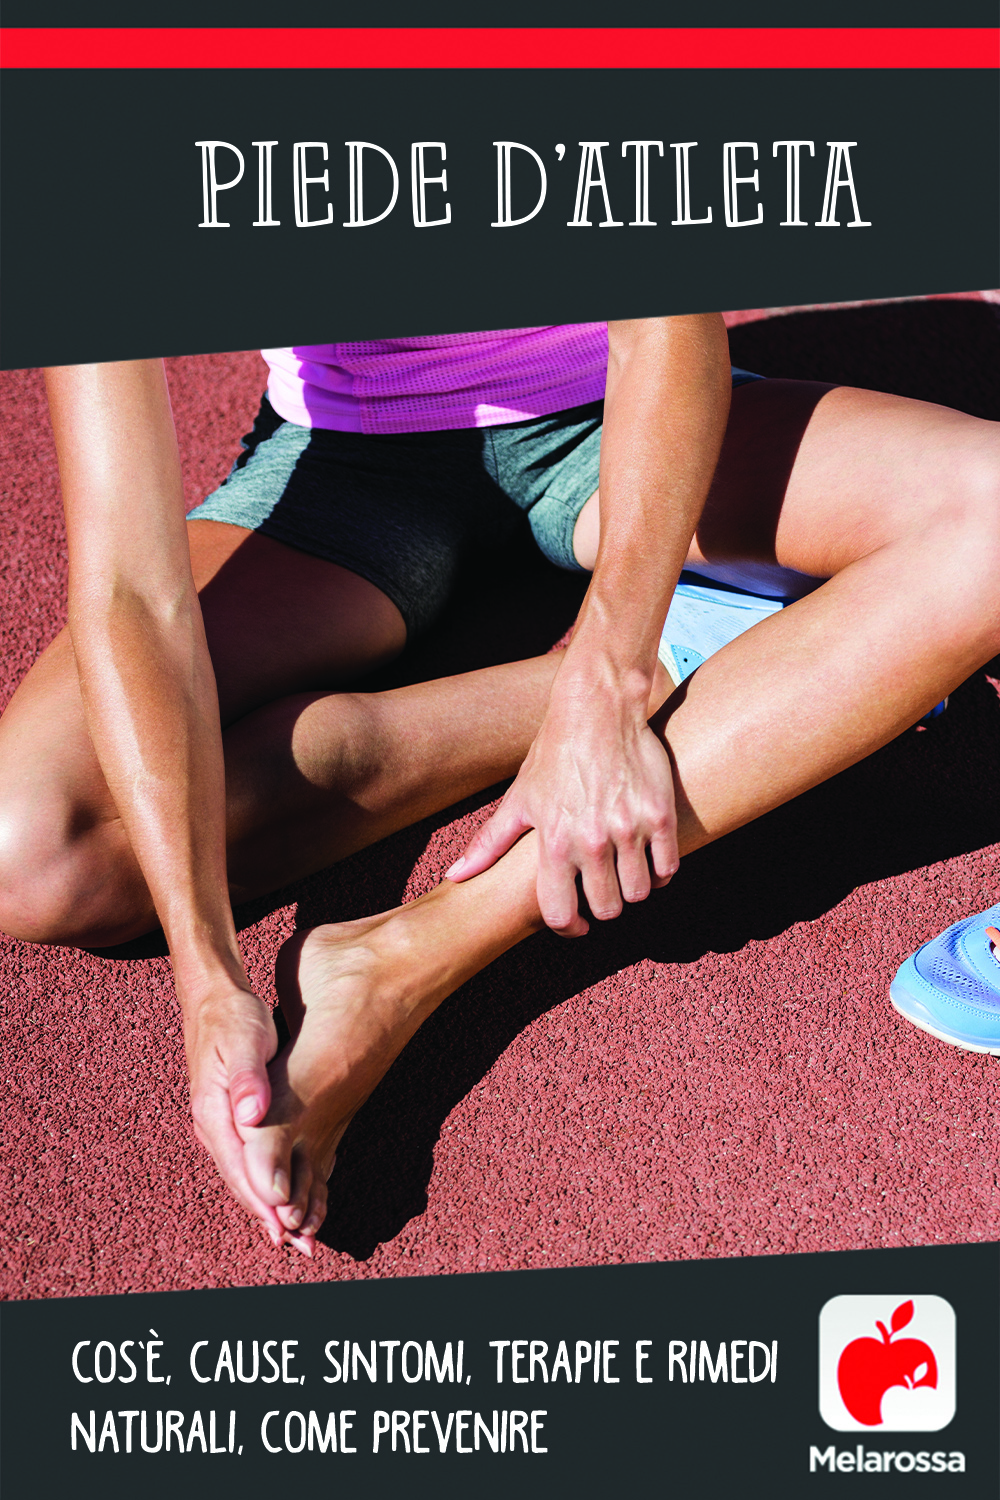 piede d'atleta: cos'è, cause, sintomi e cure 